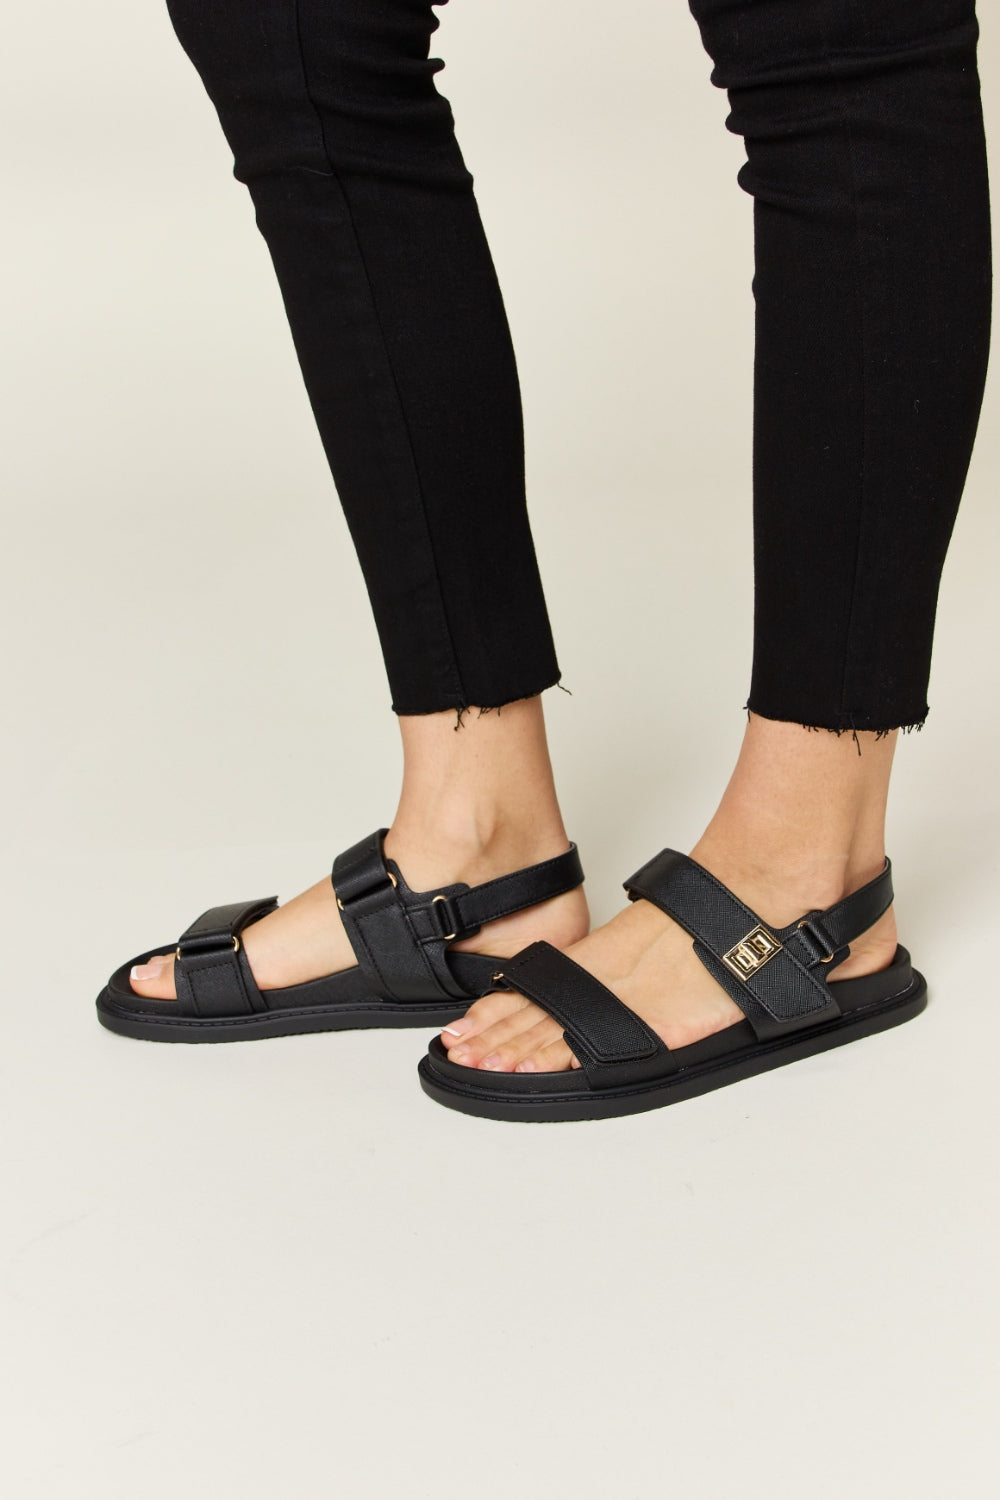 WILD DIVA Velcro Double Buckle Strap Slingback Ankle Strap Black Flat Sandals